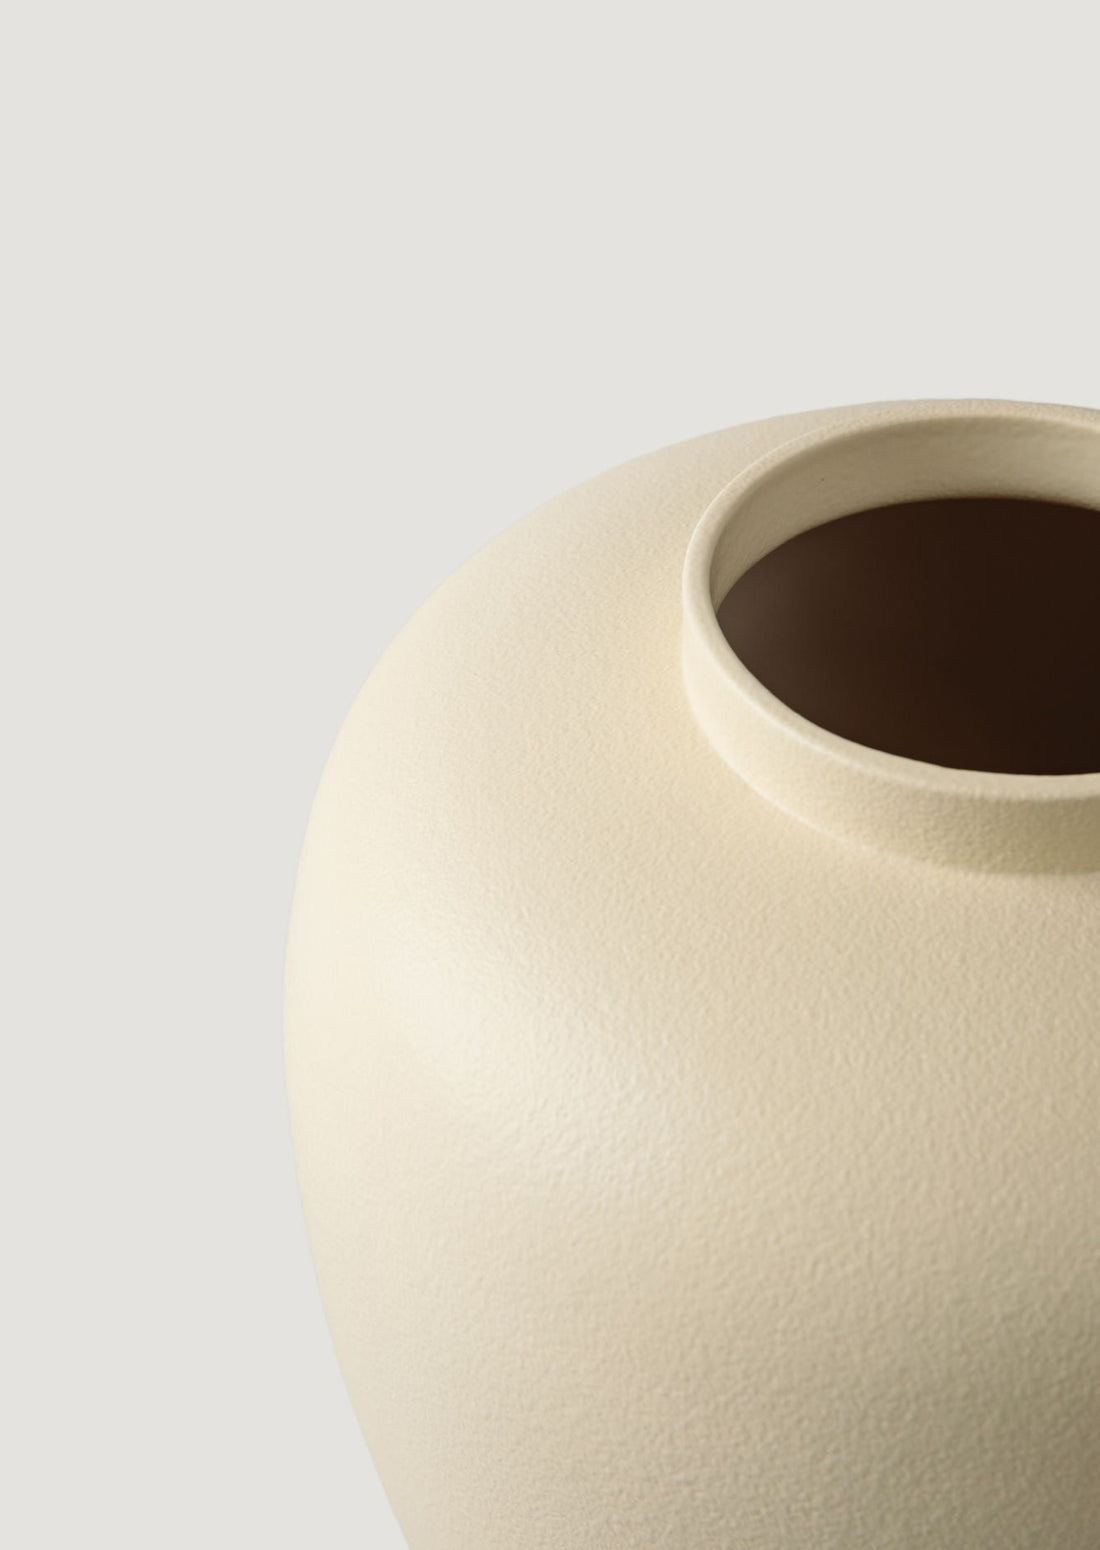 Glazed Vanilla Ceramic Vase in Close Up View